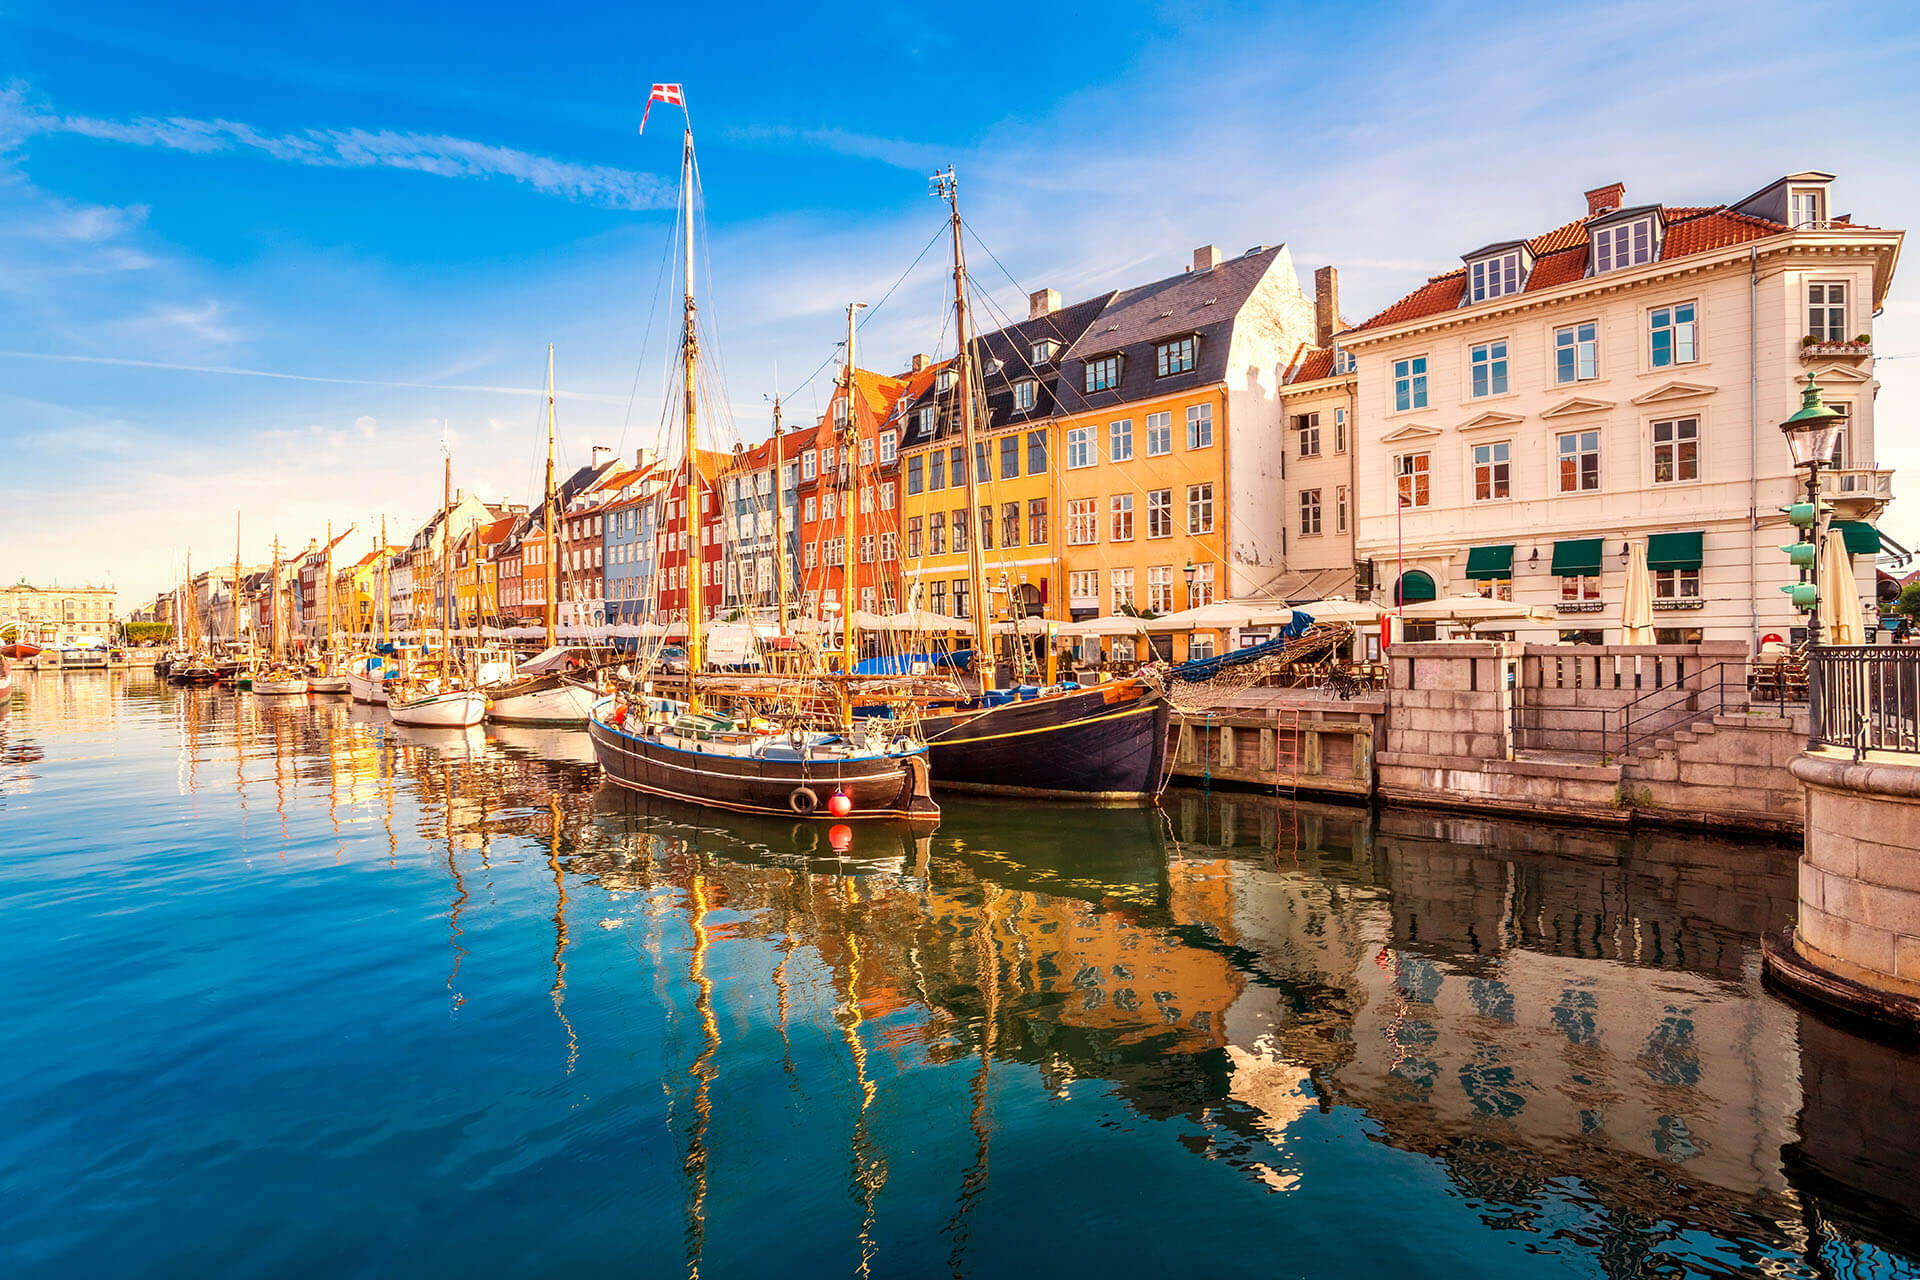 Denmark: New Application Form for Sideline Employees